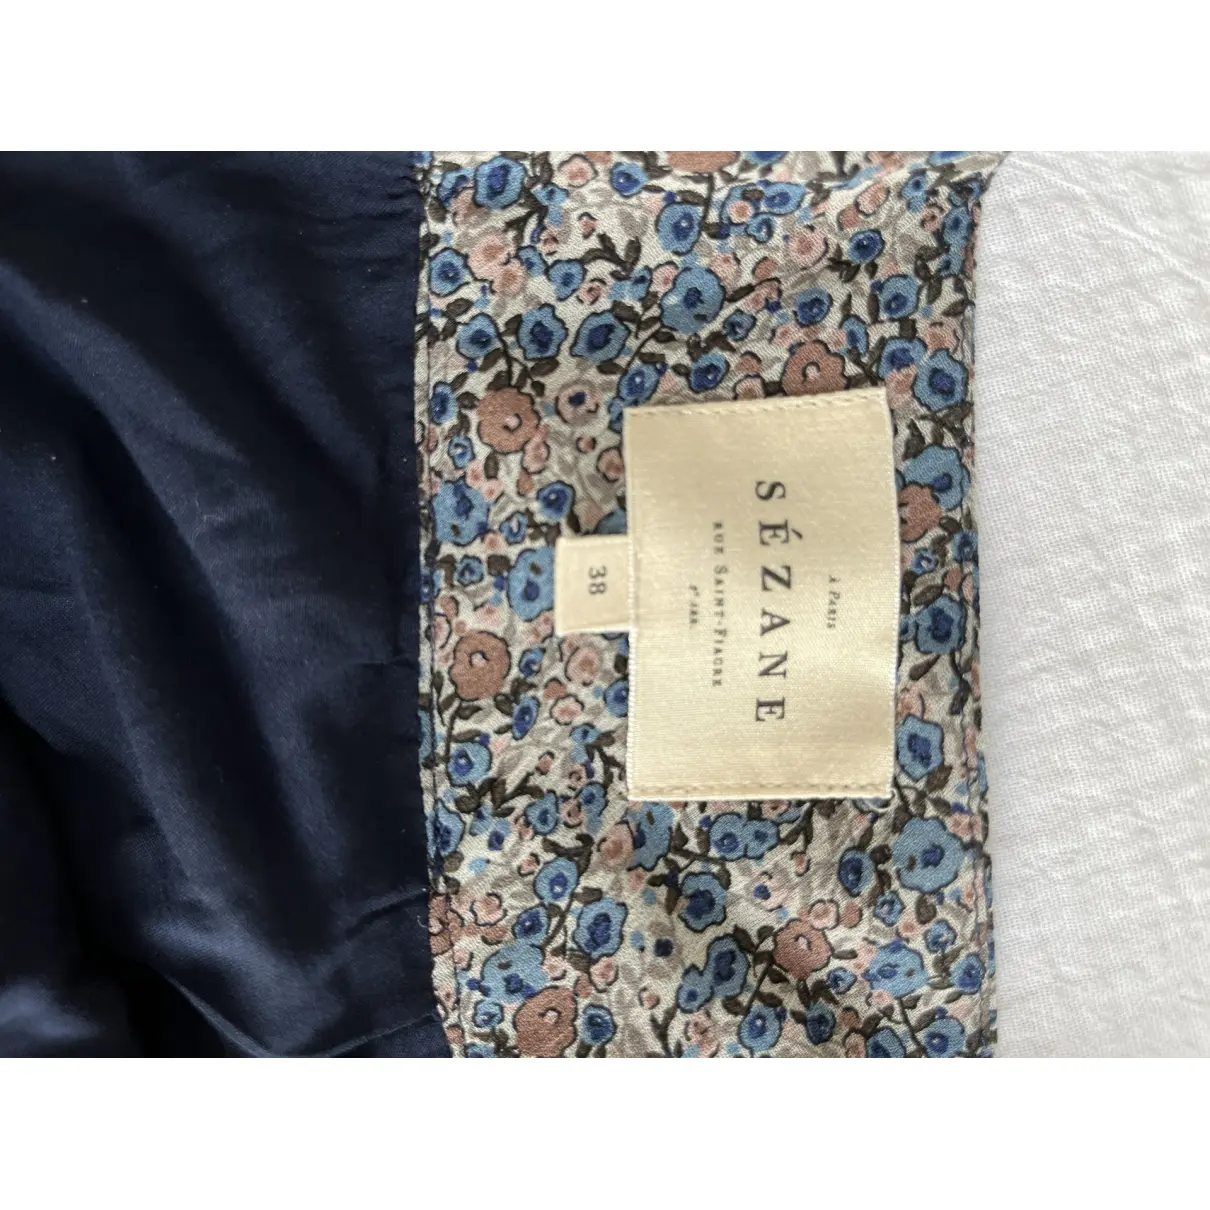 Buy Sézane Fall Winter 2020 mid-length skirt online